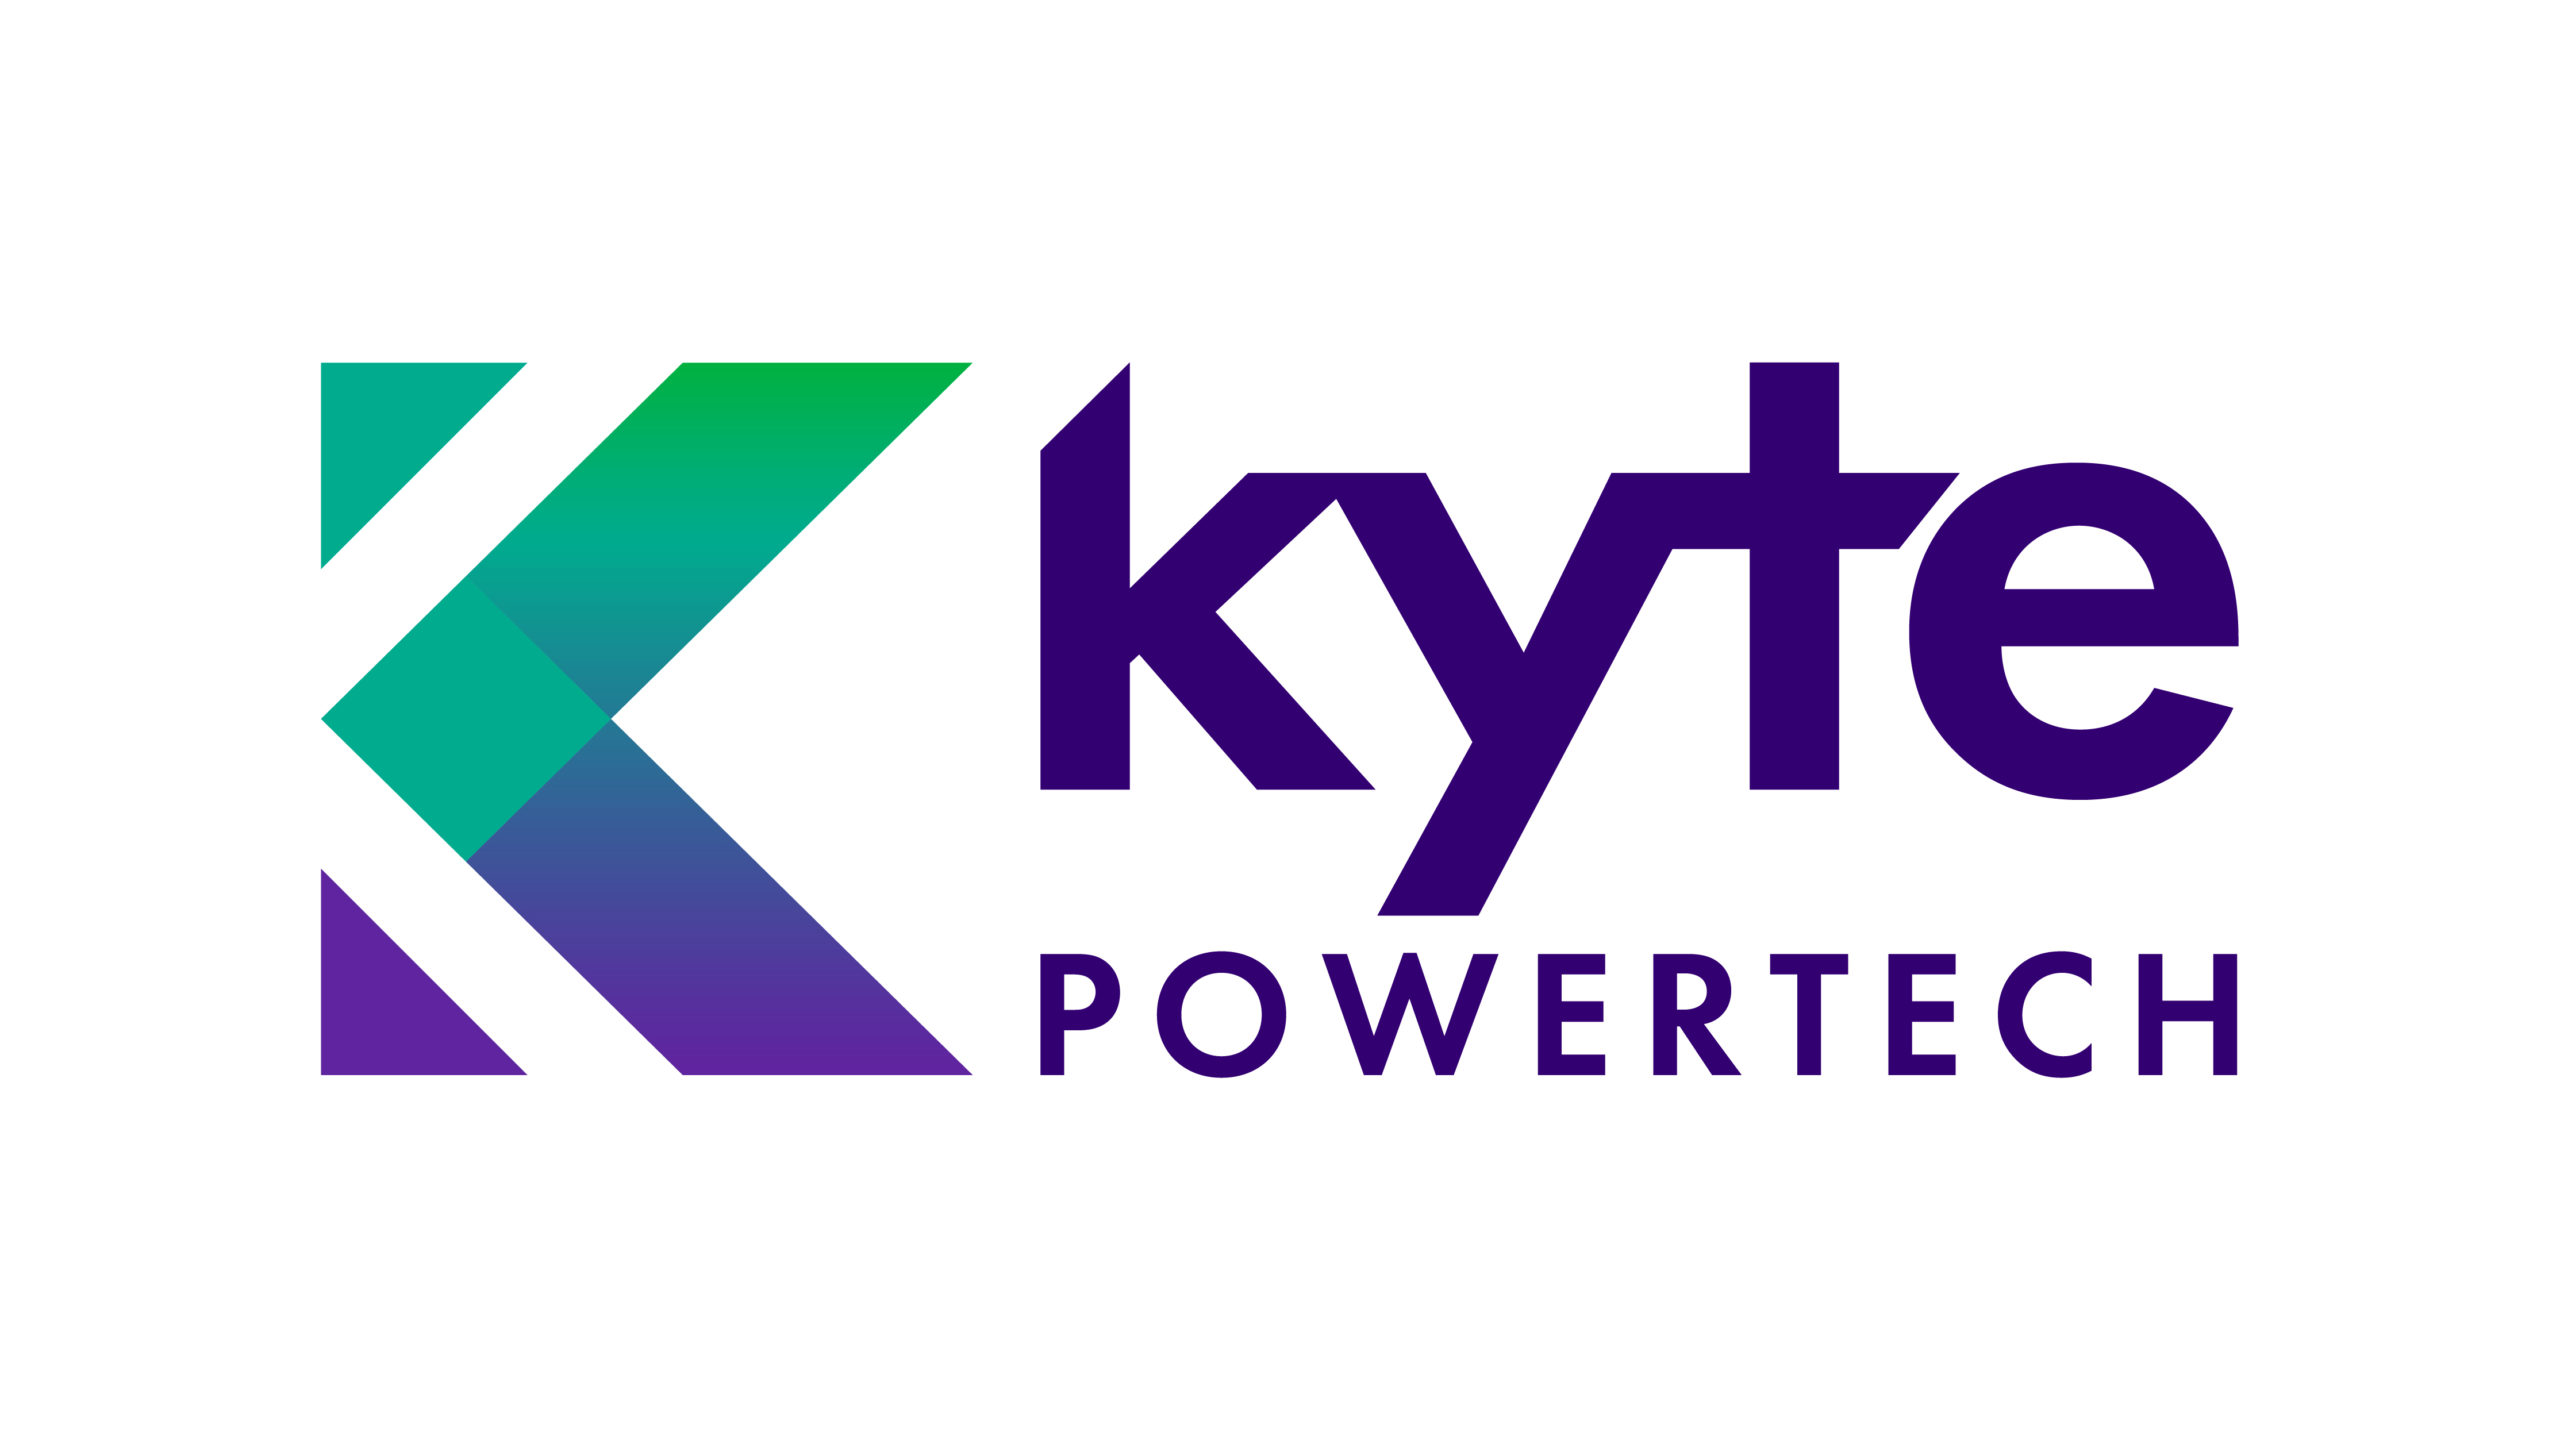 Kyte Powertech Div 3A & 3B League Tables after Round 3